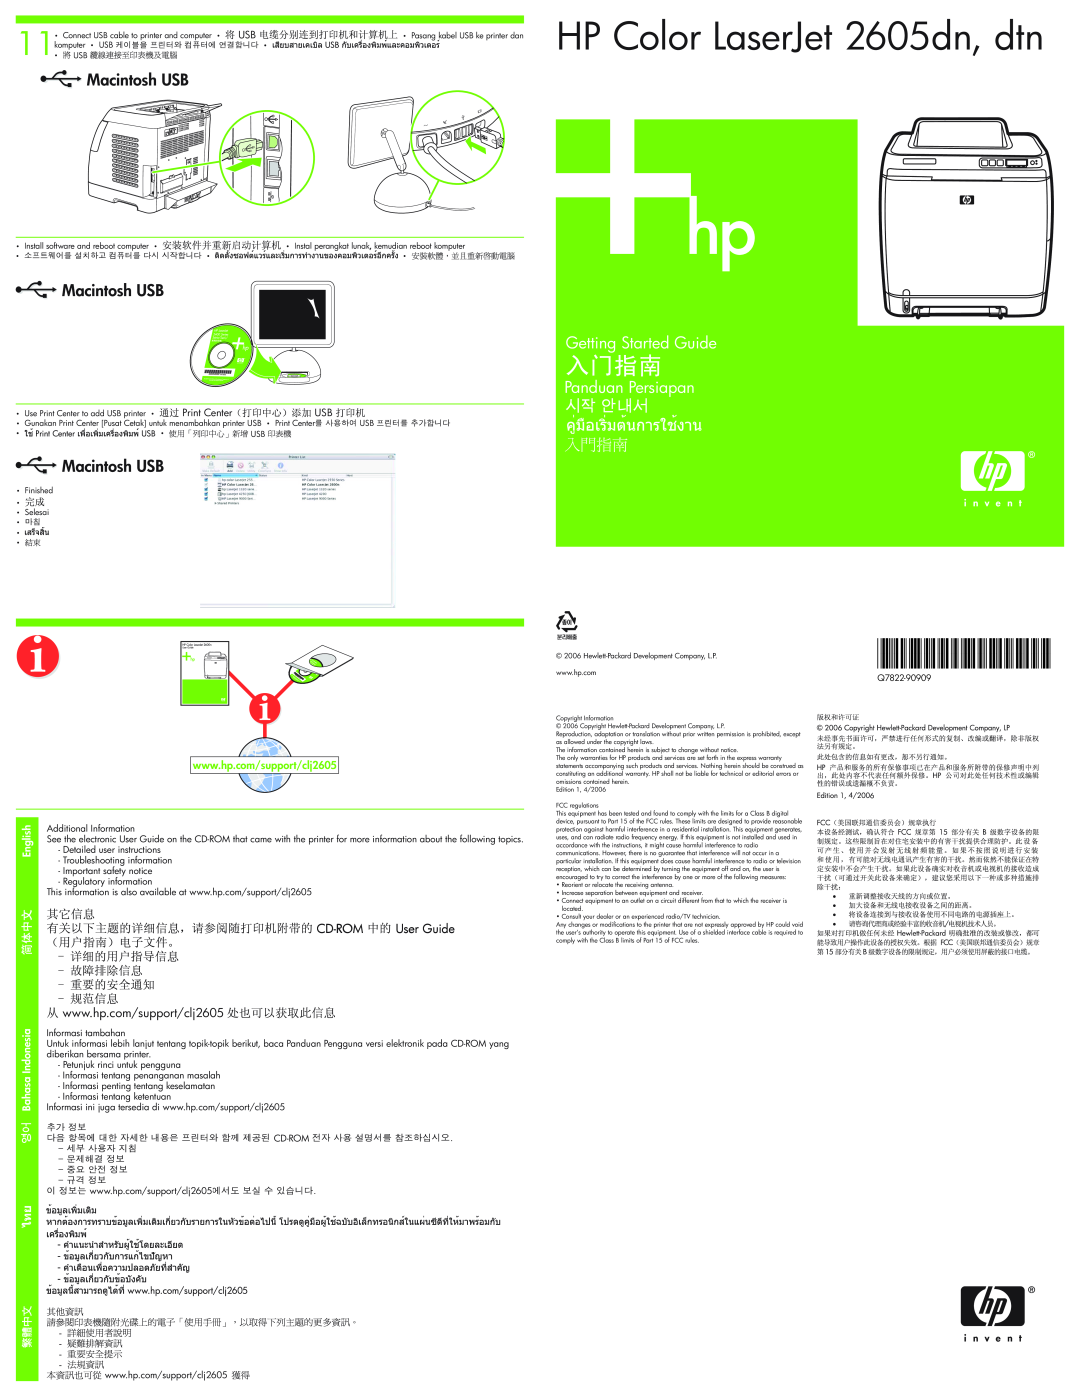 HP 2600dtn manual Macintosh USB, Print Center, HP Color LaserJet 2605dn, dtn, 11 USB, Q7822-90909, Cd-Rom, User Guide 